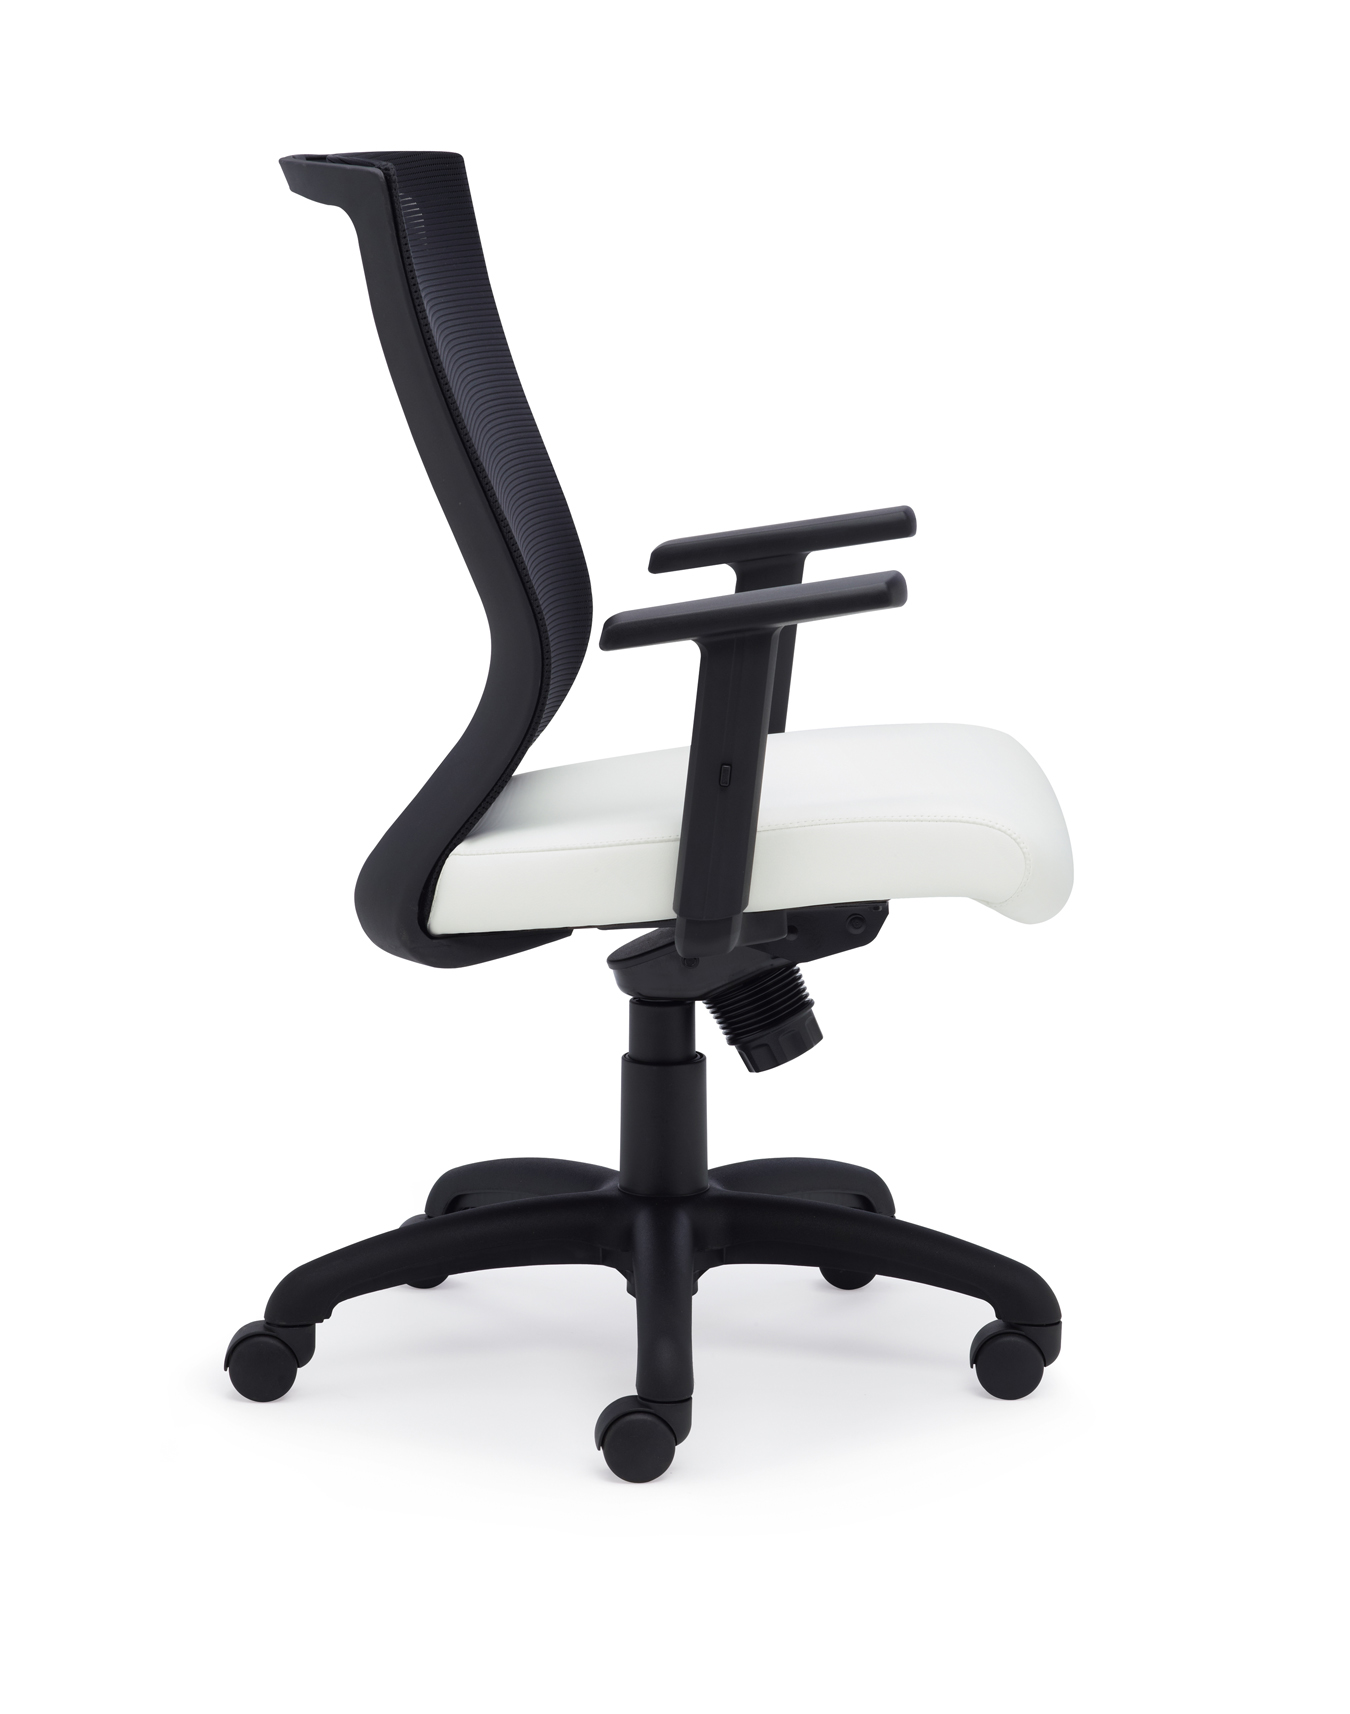 Lite Office Chair